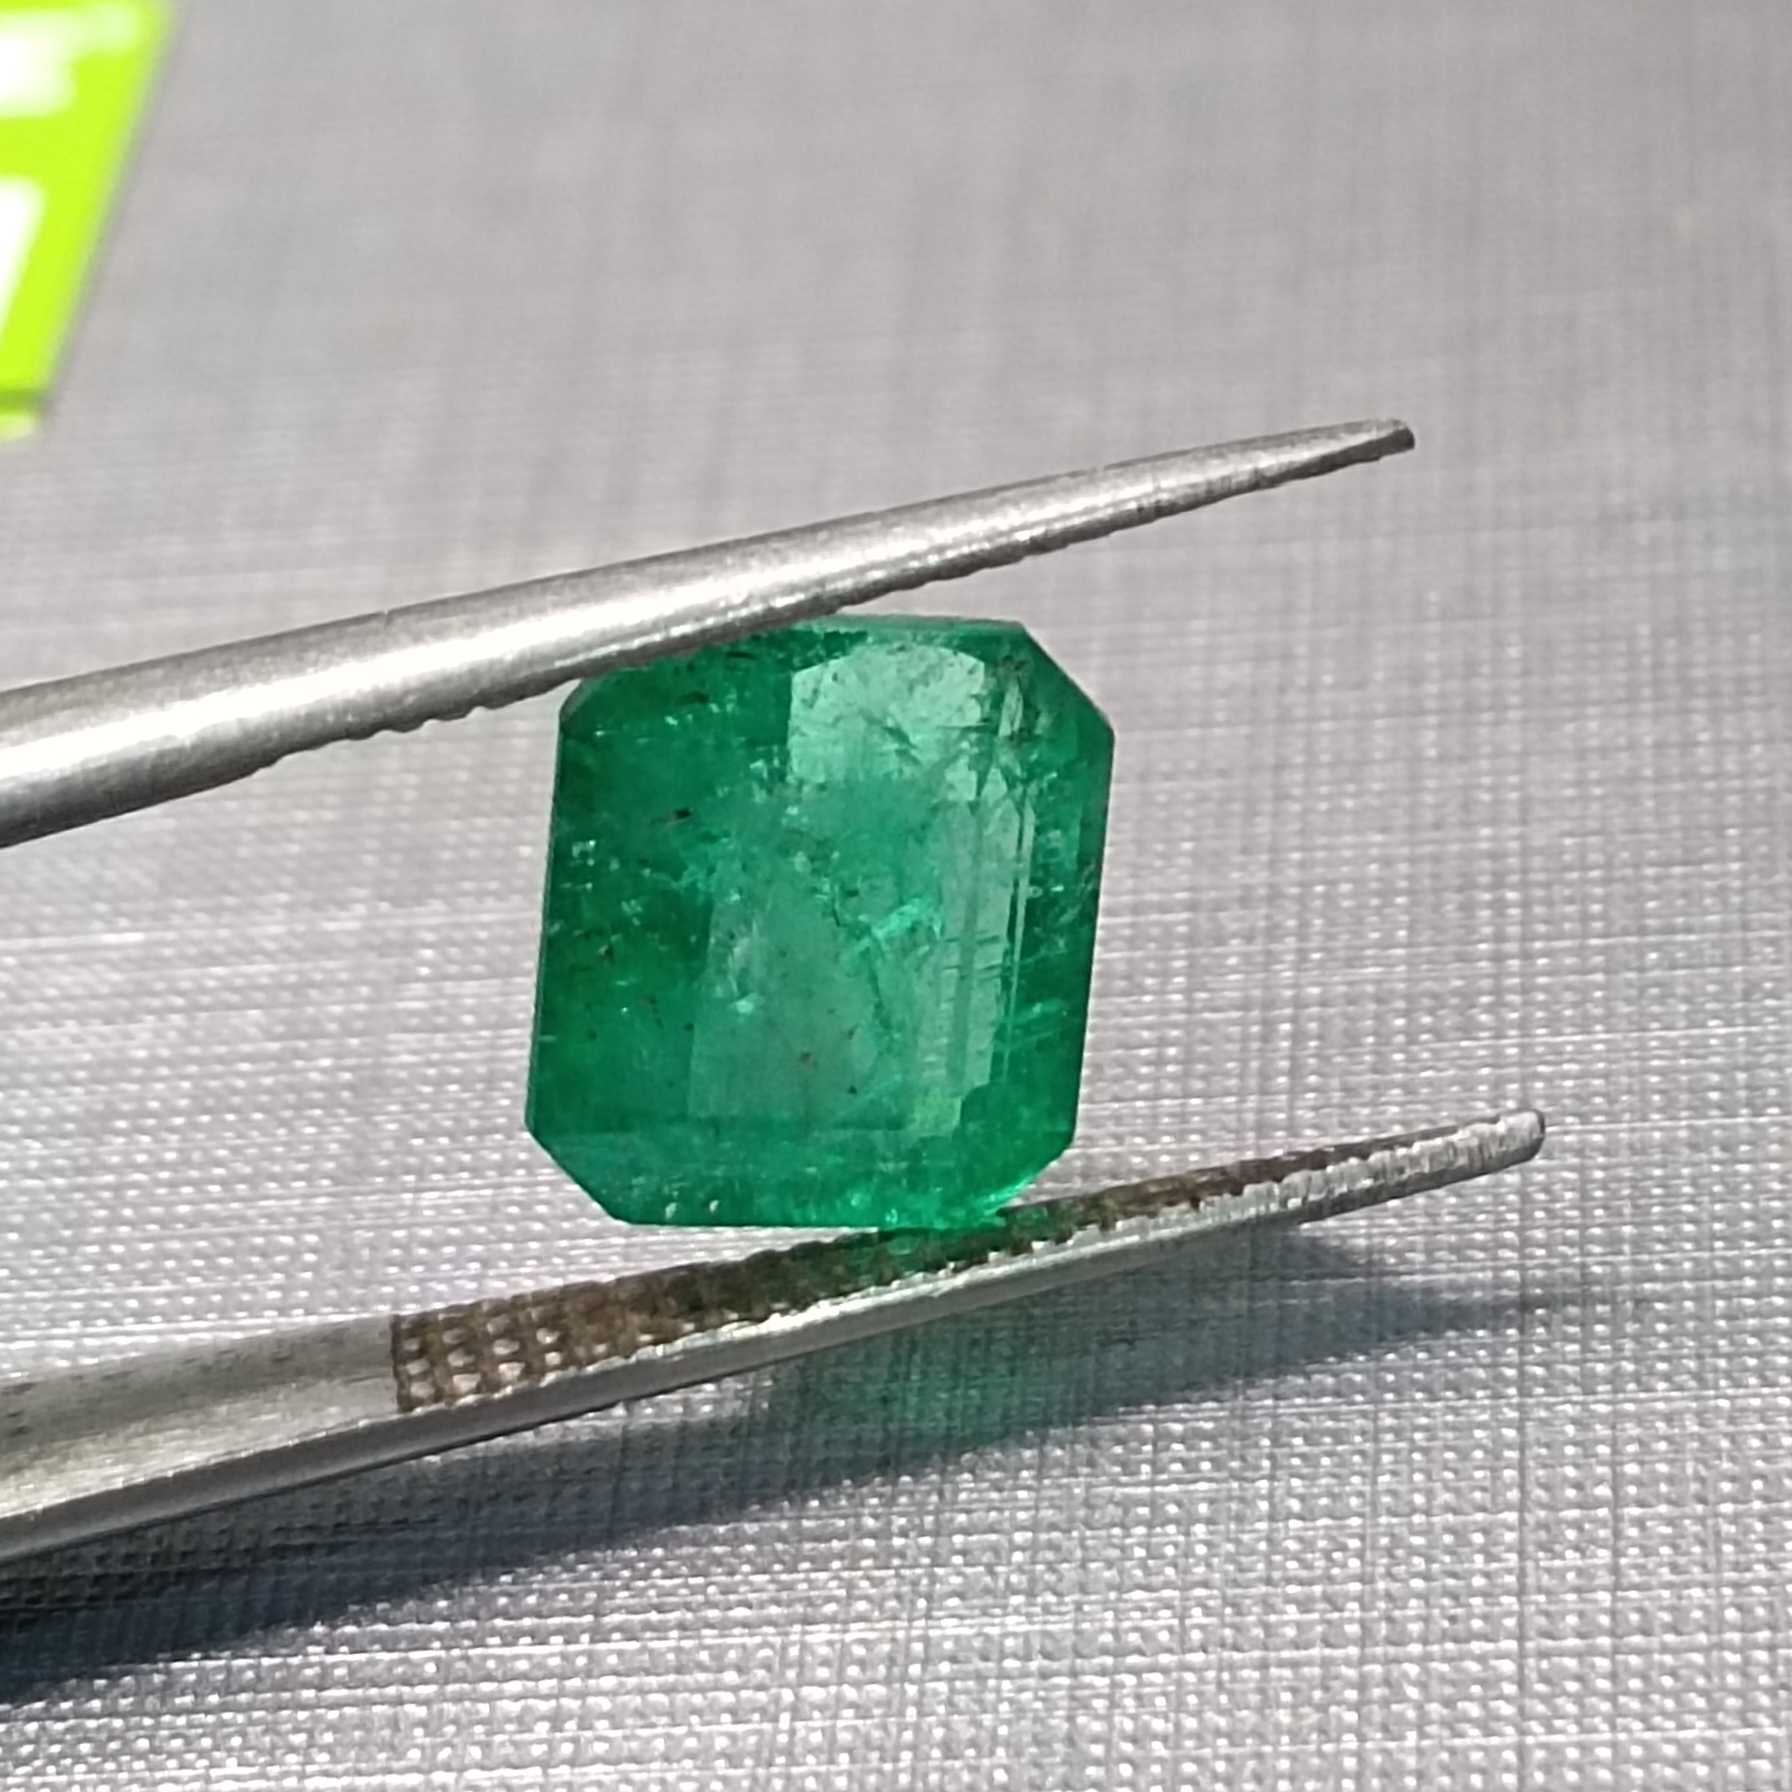 3.19ct emerald cut emerald stone Panjshir green color